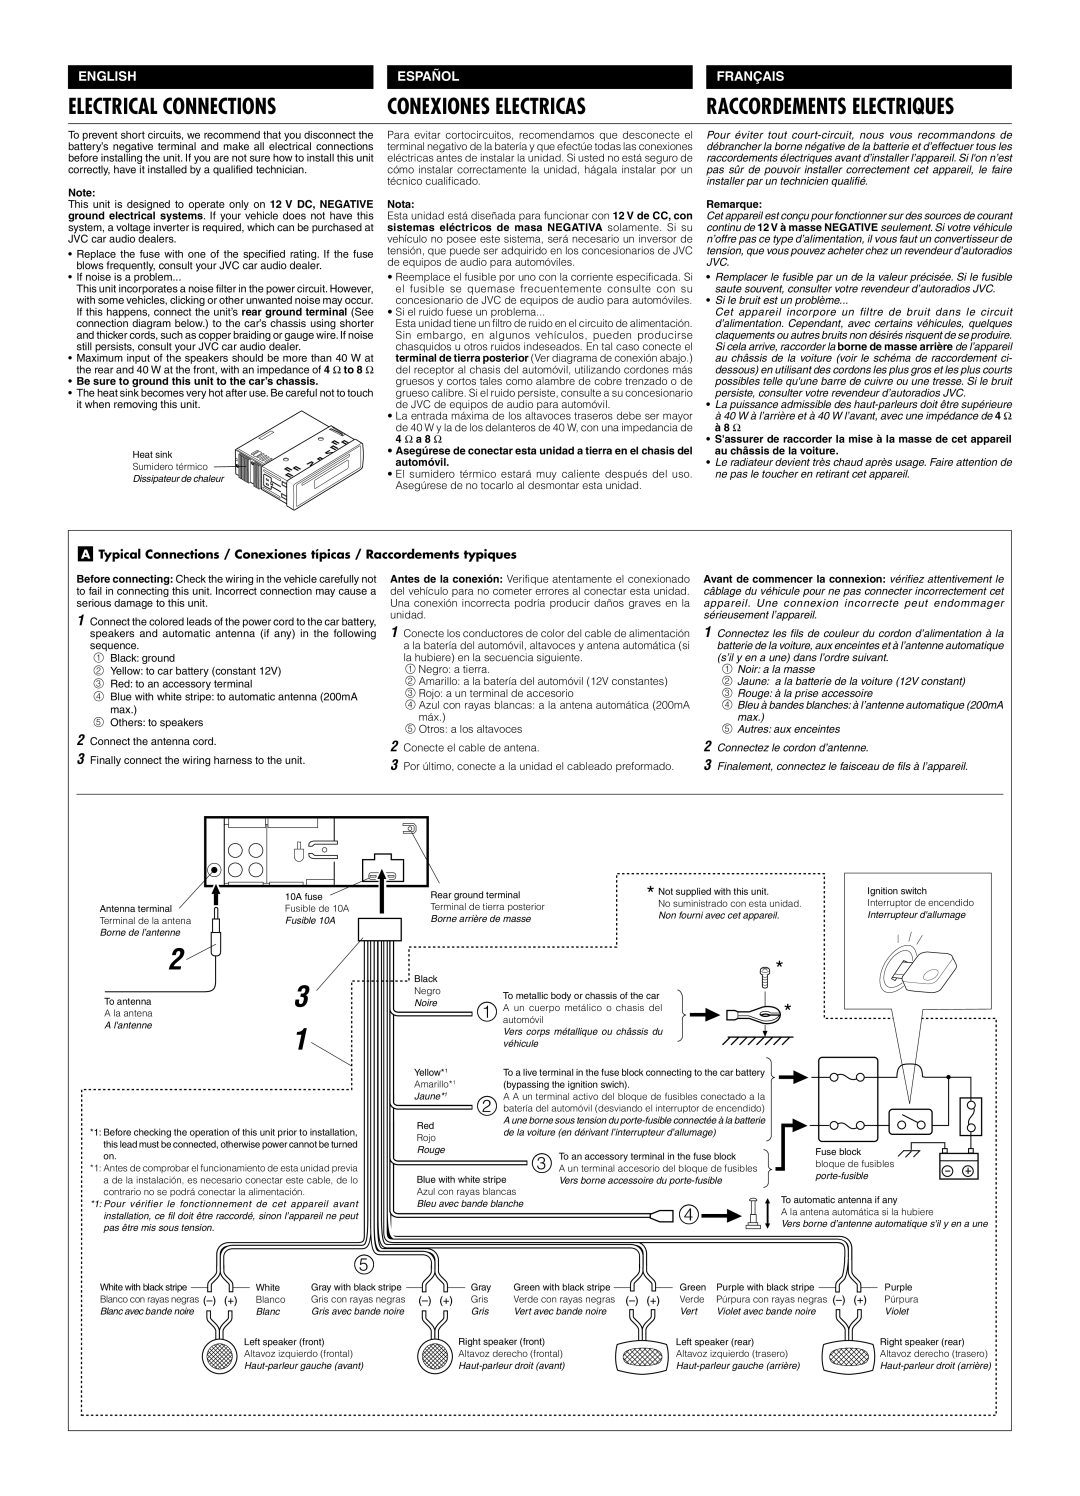 JVC KD-S50 manual Electrical Connections, Conexiones Electricas, English, Español, Nota, à8 Ω 